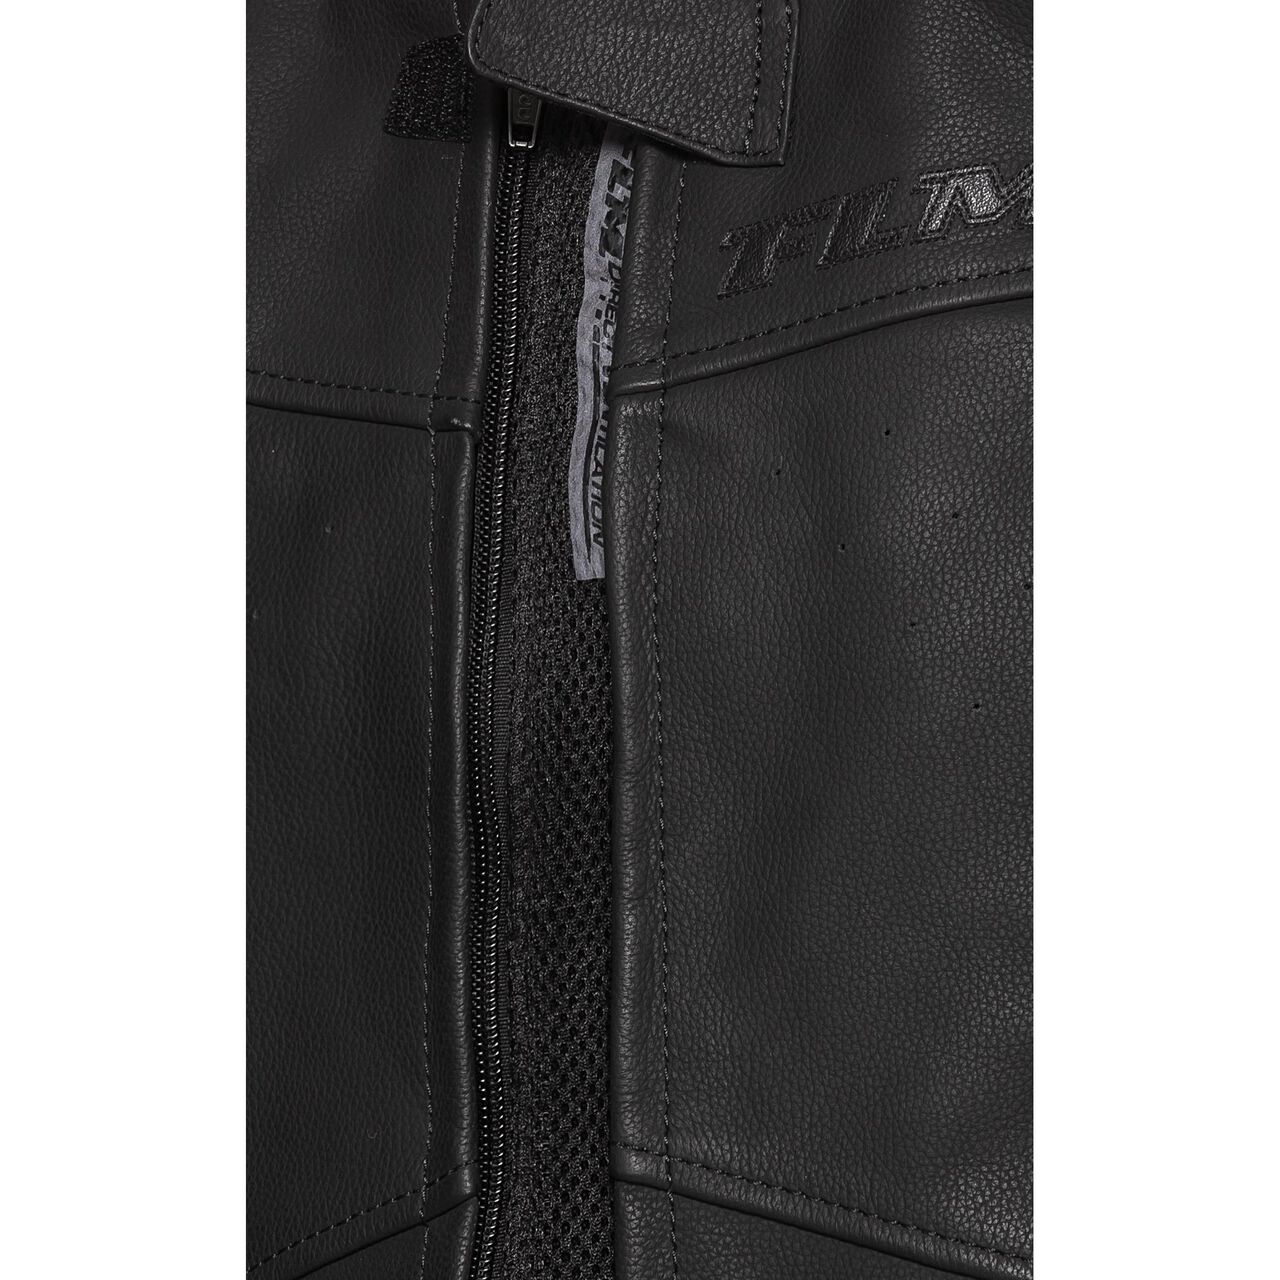 Sports leather combi jacket 4.0 black